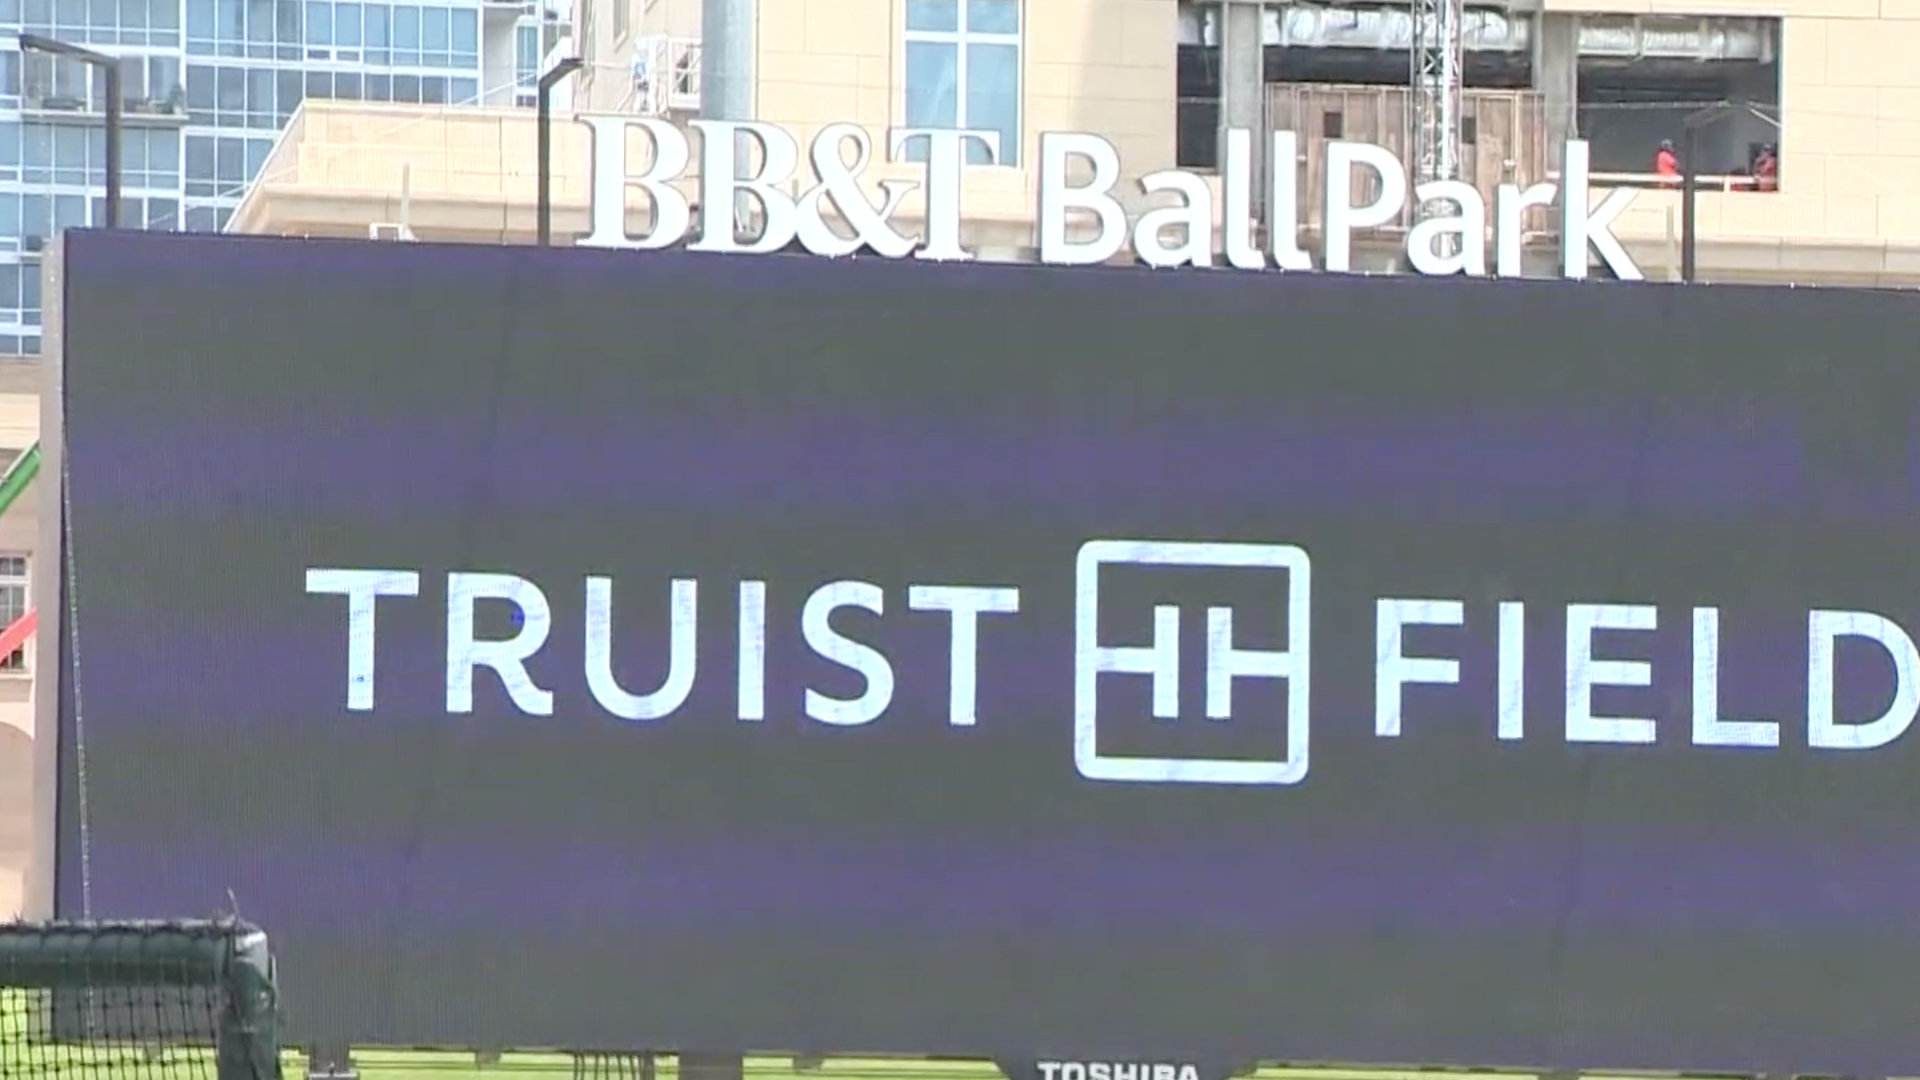 Charlotte Knights ballpark gets new name: Truist Field